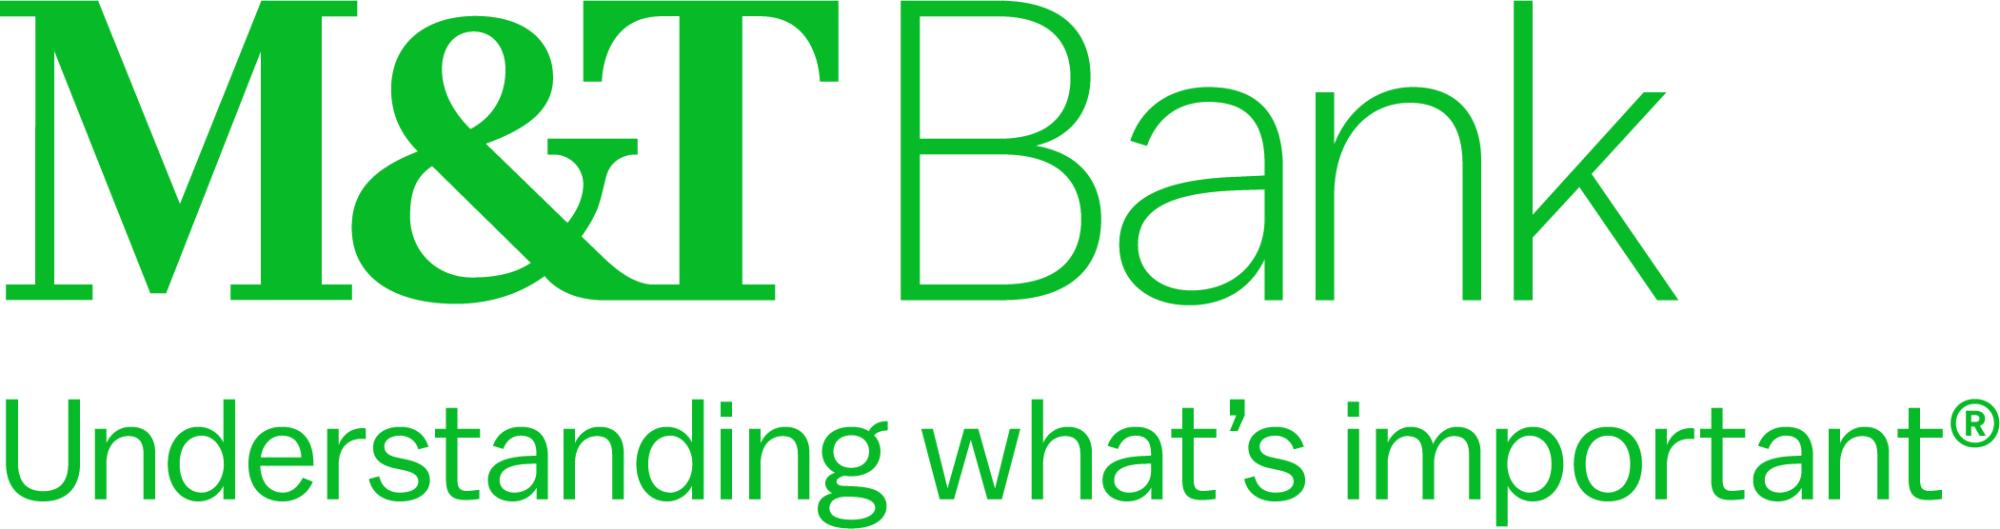 mt bank logo